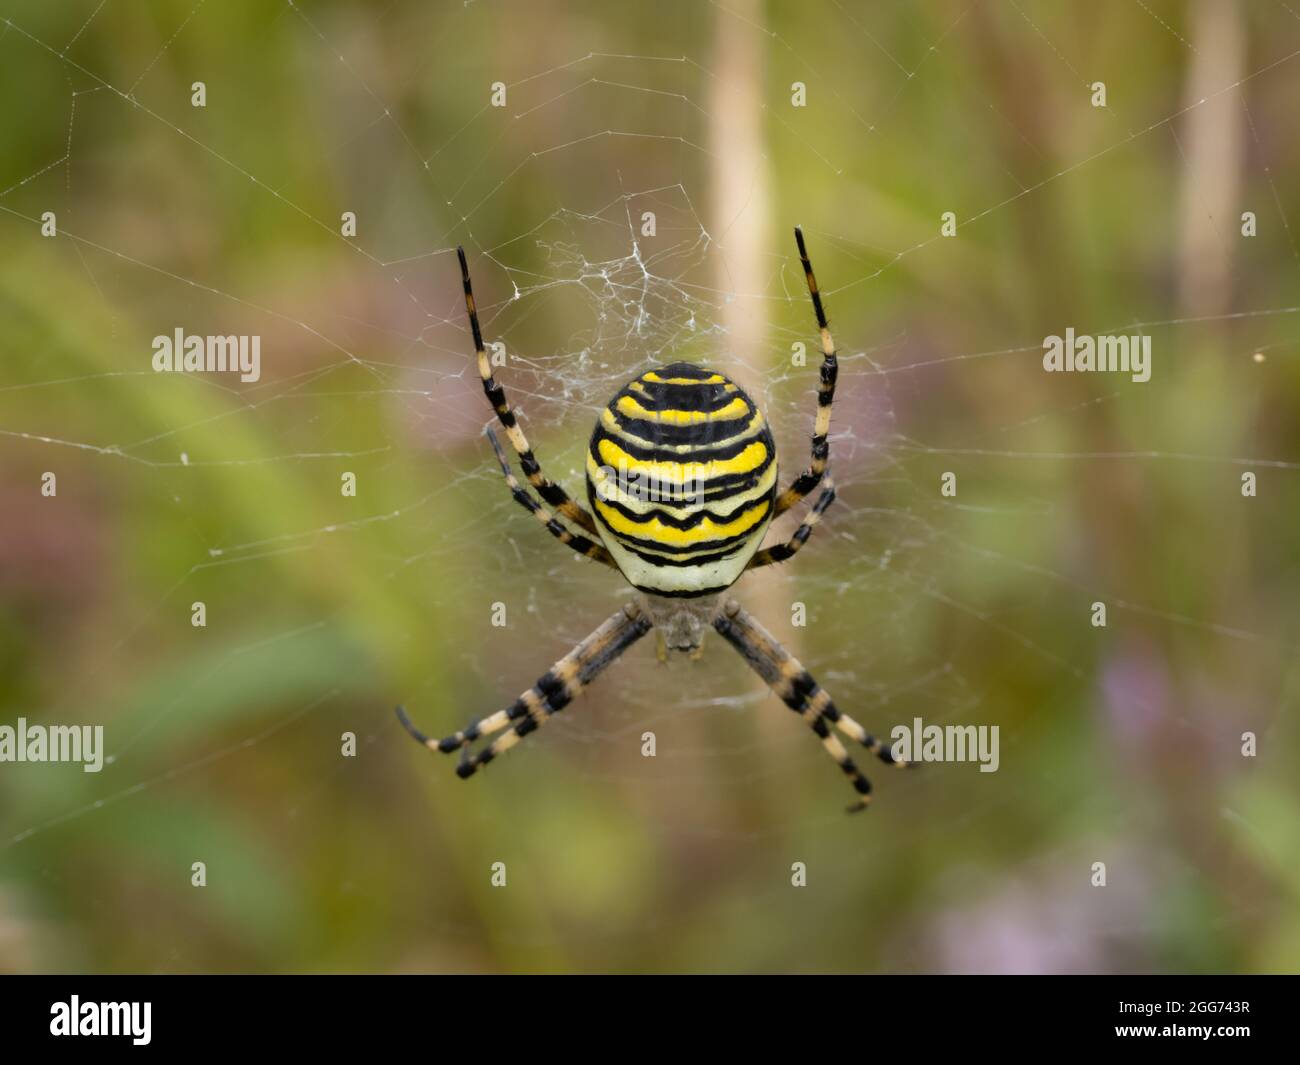 Argiope bruennichi a Wasp Spider in its web. Stock Photo